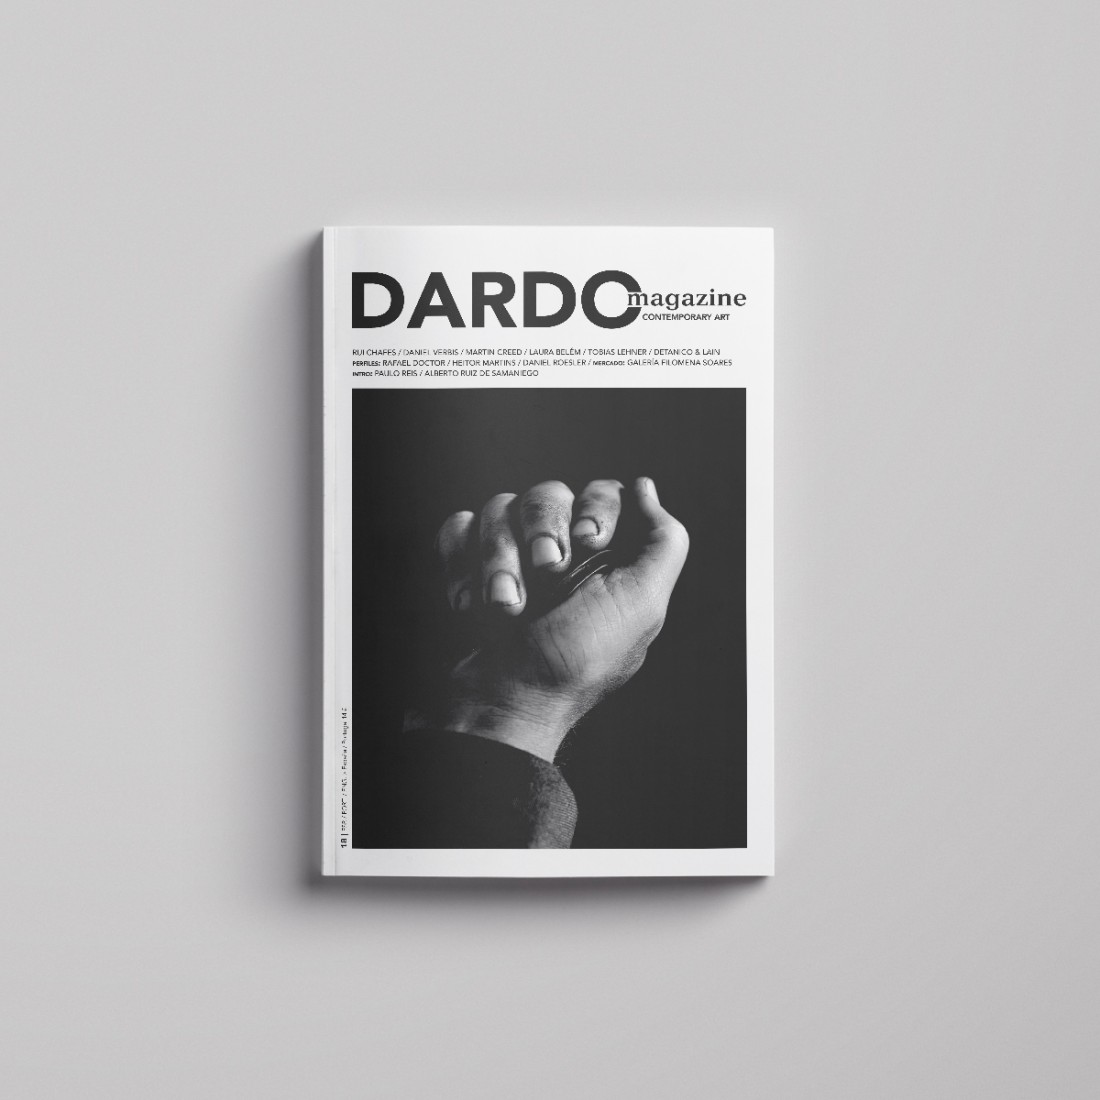 DARDOmagazine 18